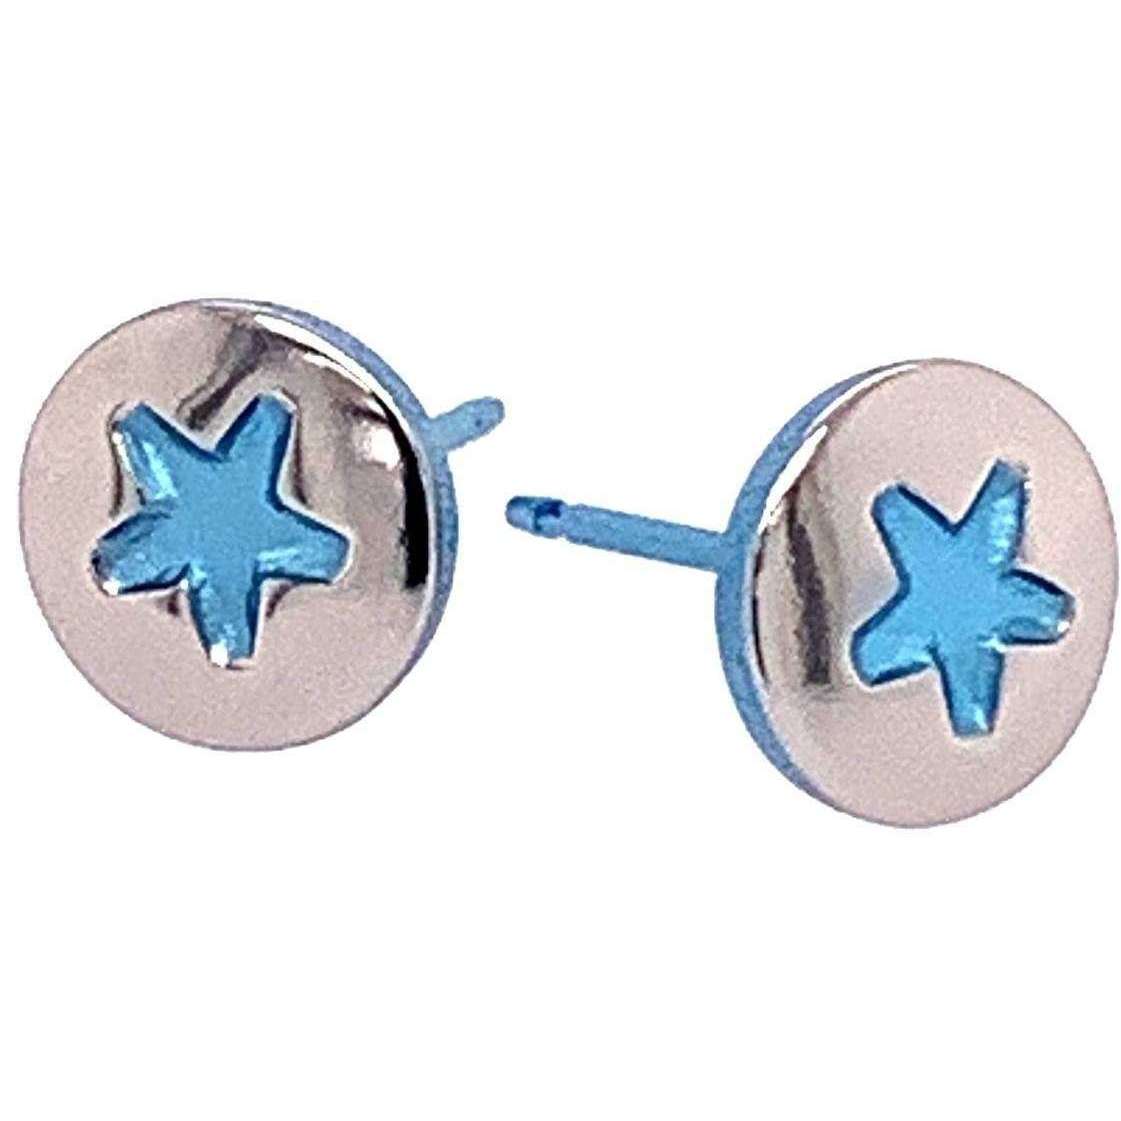 Ti2 Titanium Star Stud Earrings - Blue